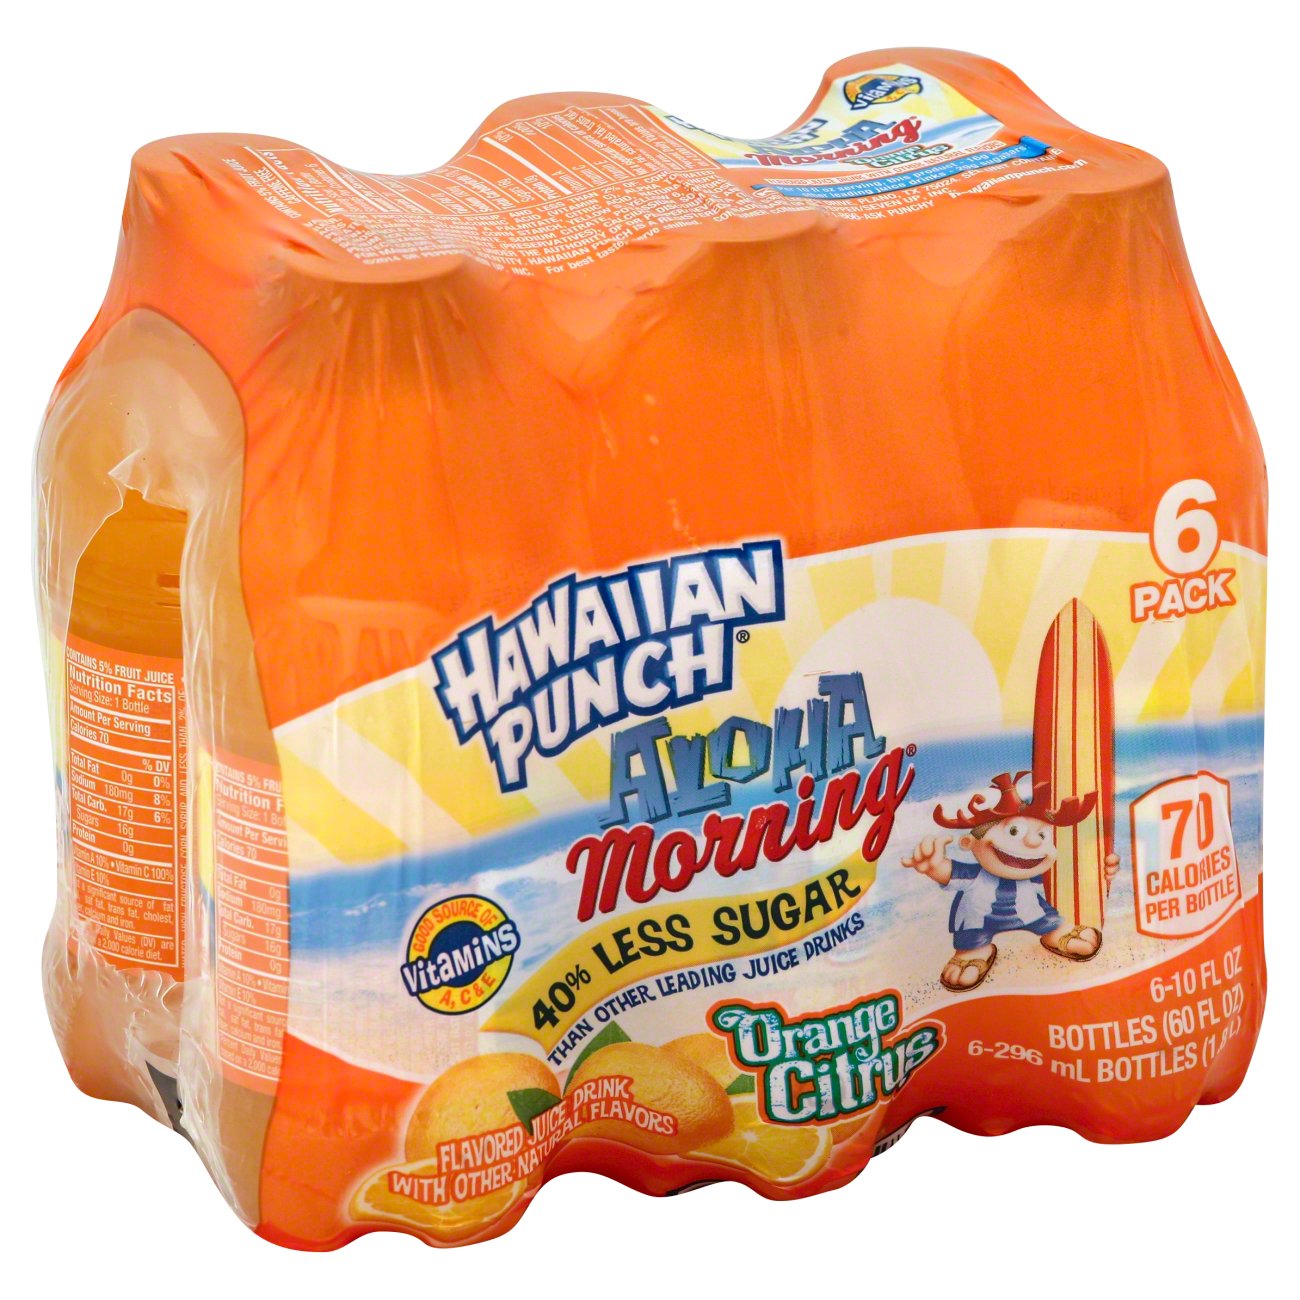 Hawaiian Punch Aloha Morning Orange Citrus Flavored Juice Drink 10 Oz Bottles Shop Juice At H E B 2373